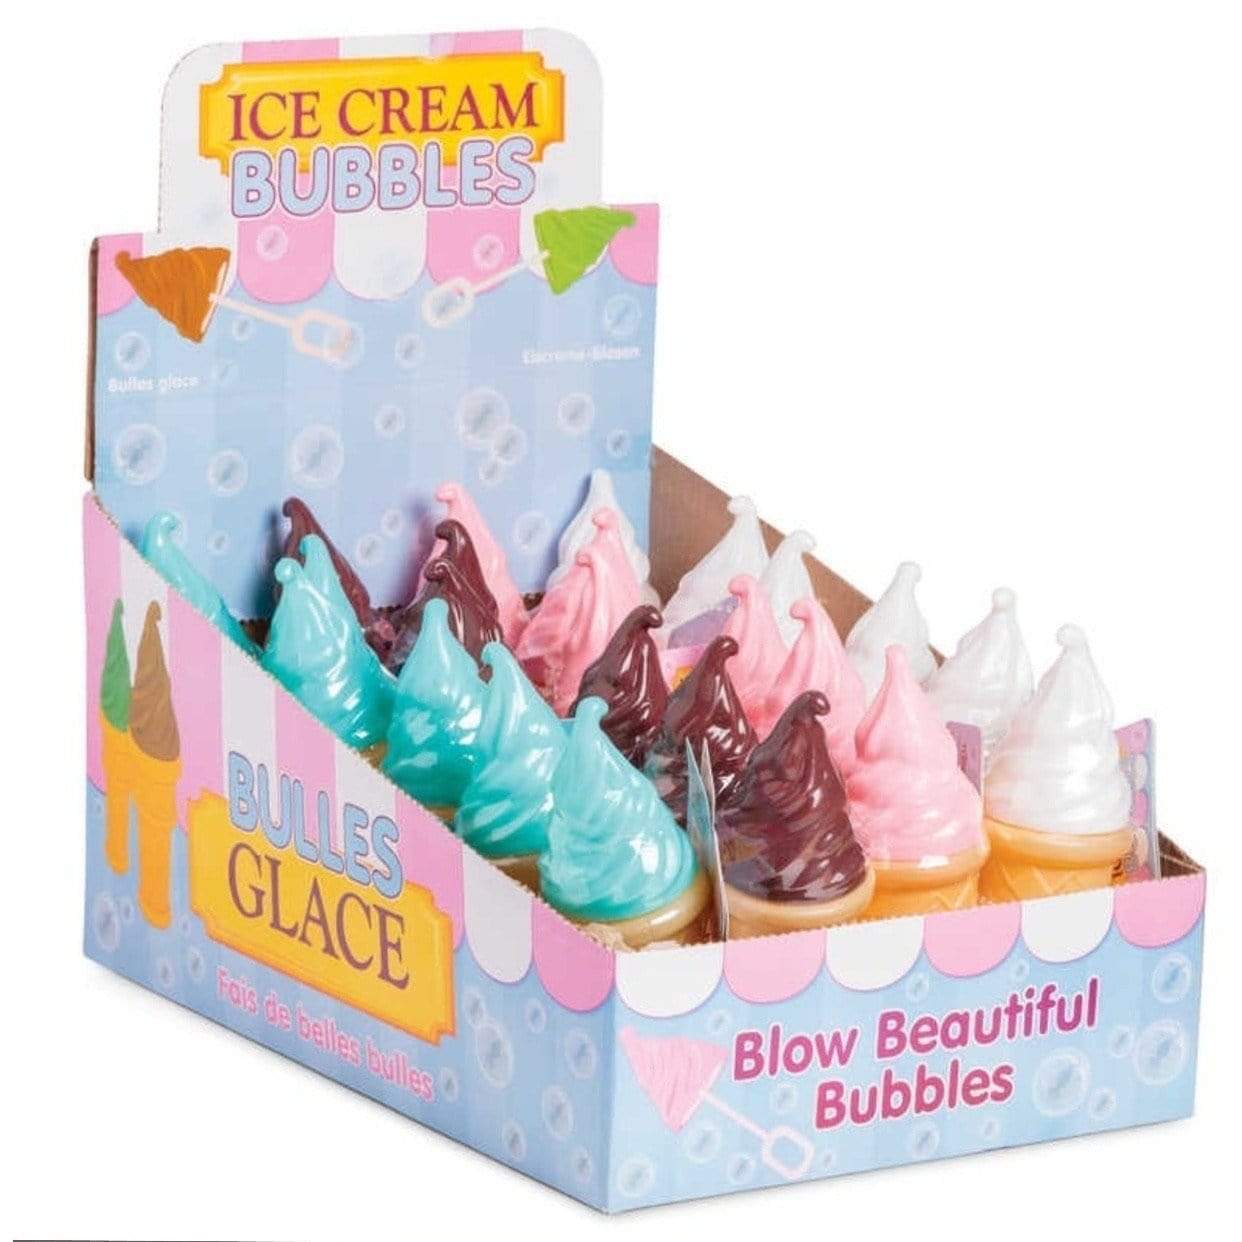 Bubbles in an ice cream shaped bottle sun fun - Wigwam Toys Brighton (5032953446538)